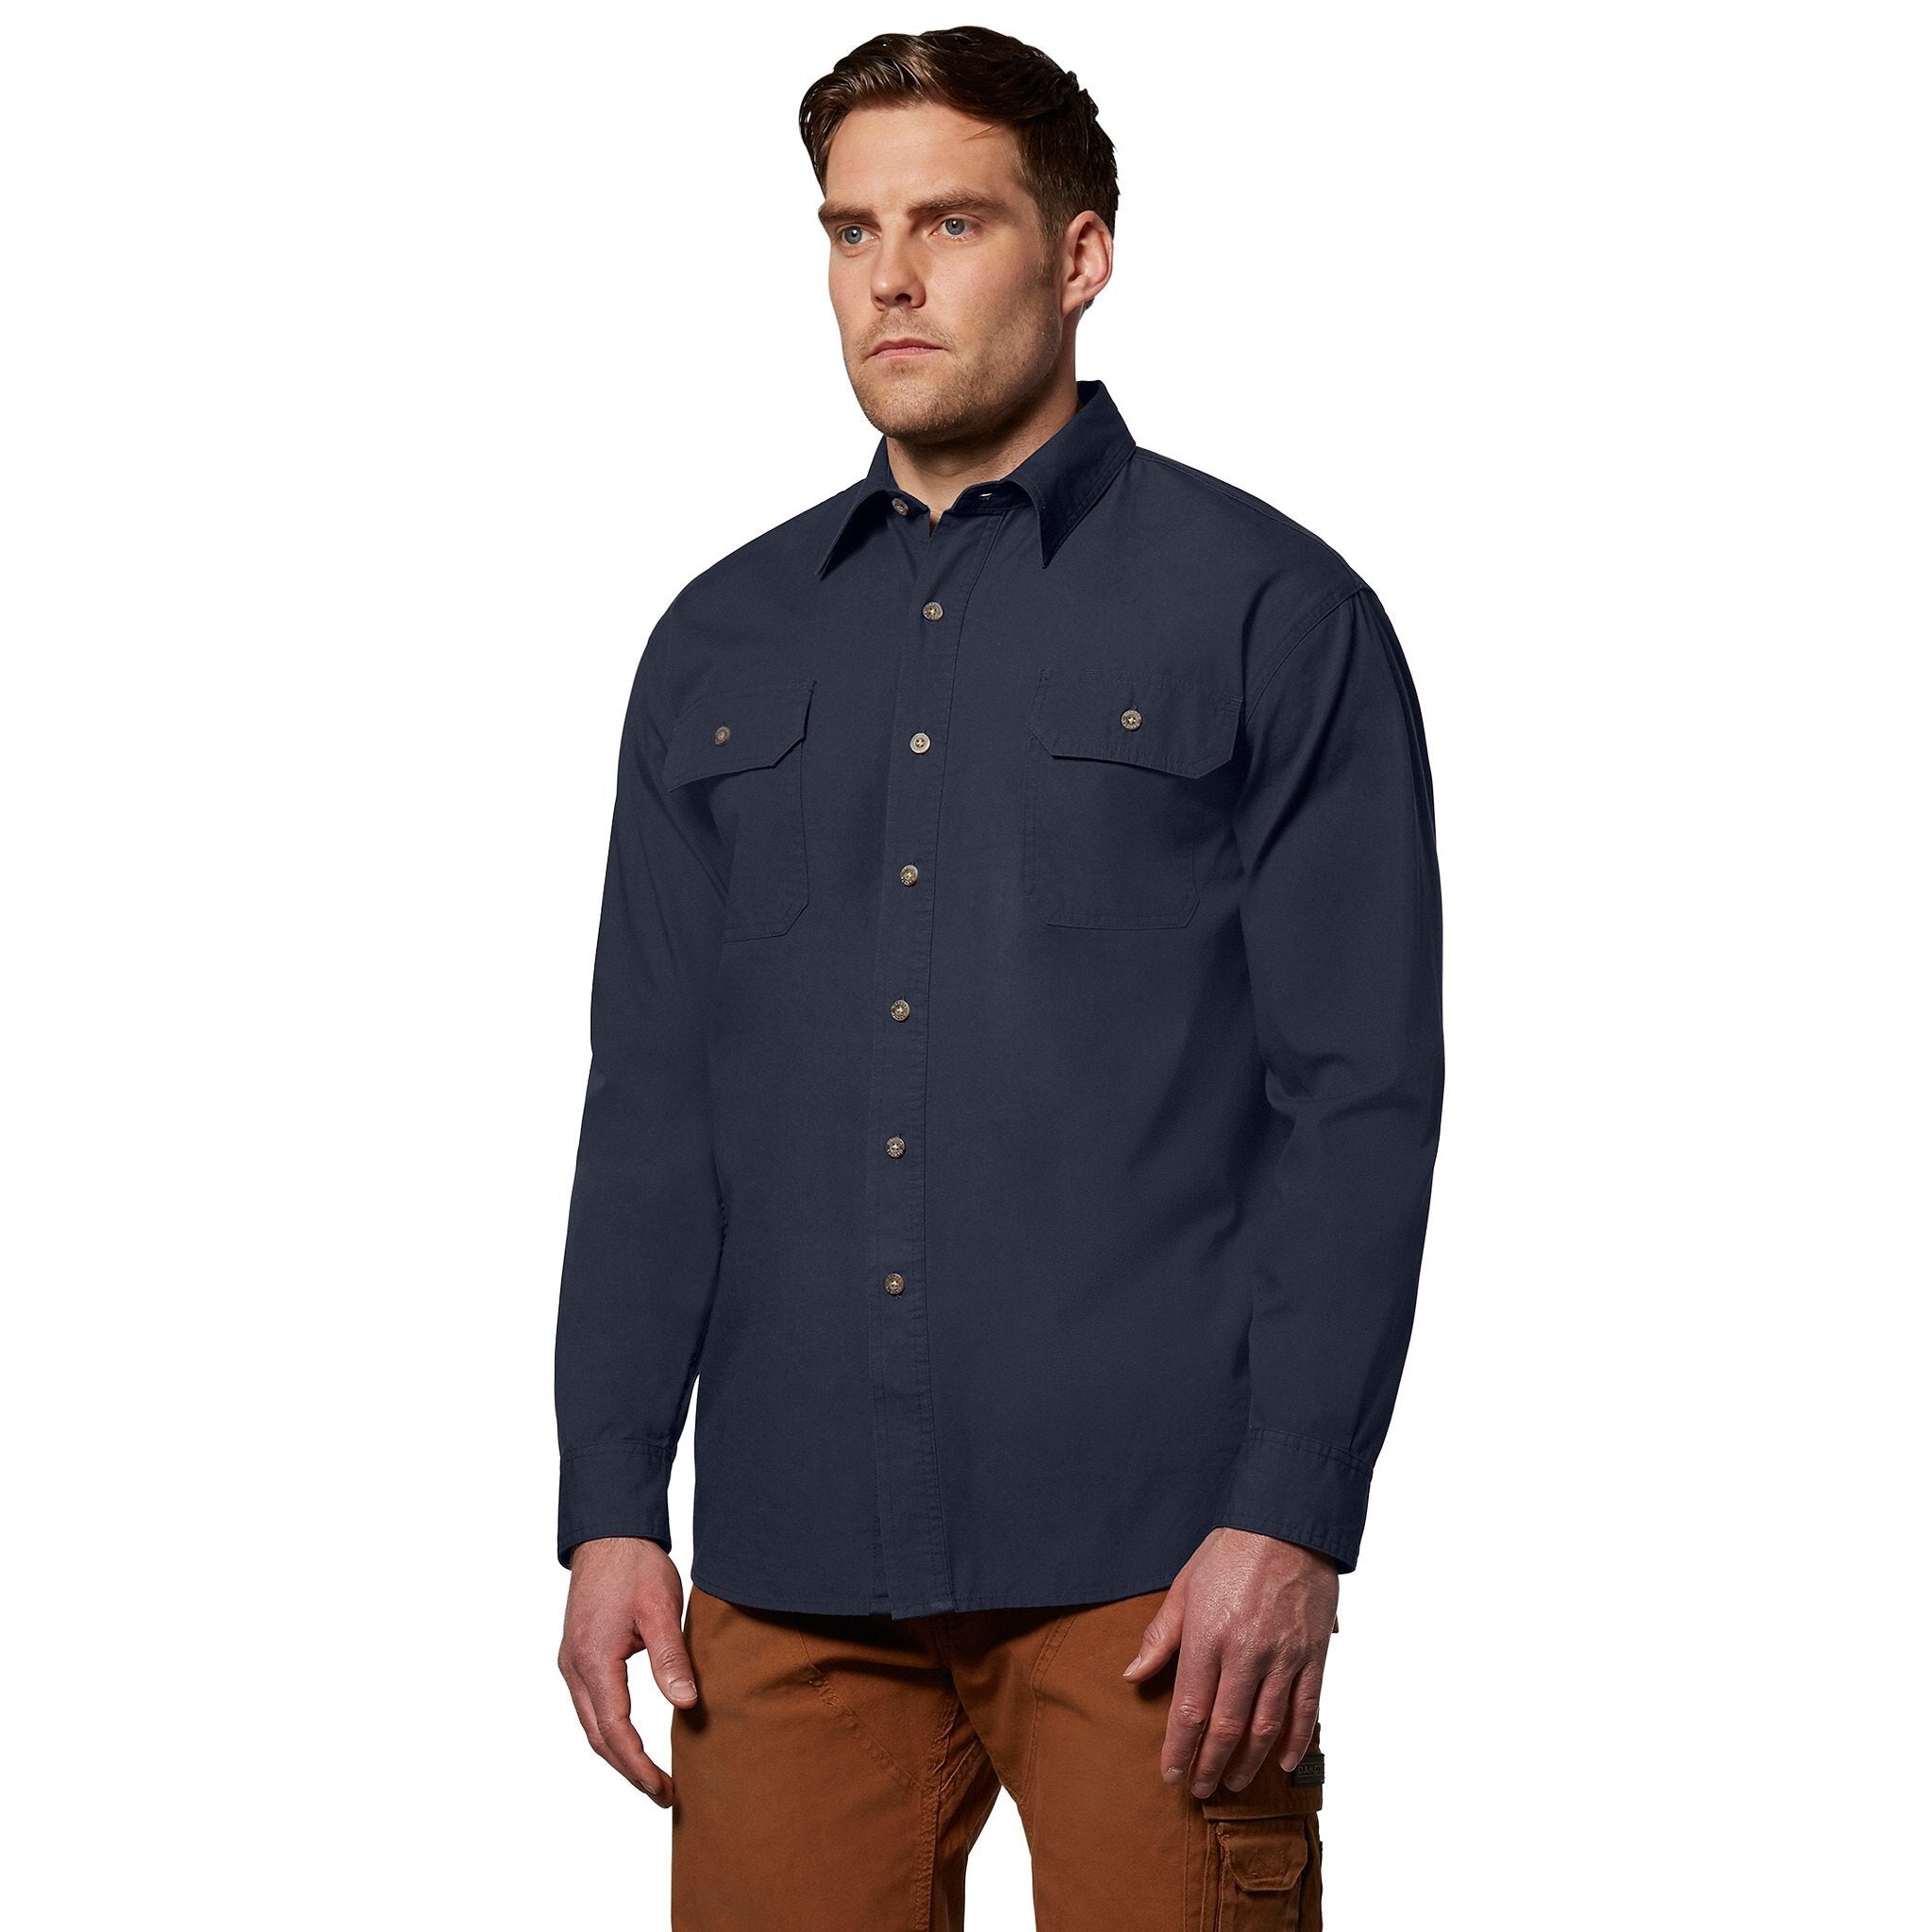 KS04 - Kolossus Men's Lightweight Cotton Blend Long Sleeve Work Shirt with Pockets Medium / Black